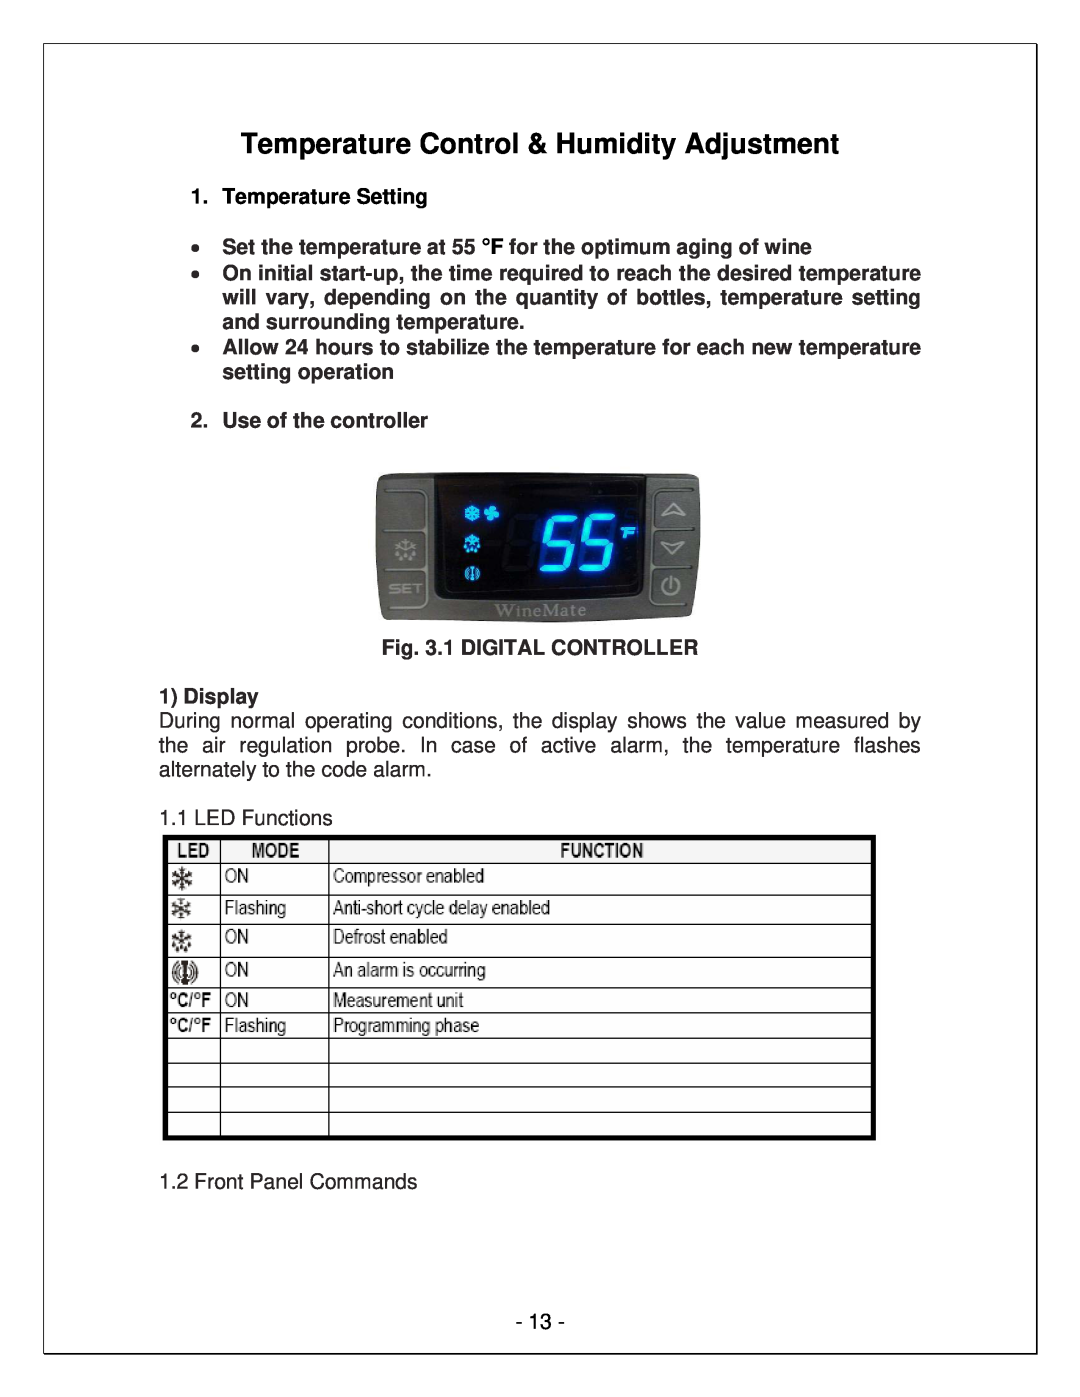 Vinotemp WM-8500HTD, VINO8500HZD, WM-1500-HTD, VINO3500HZD Temperature Control & Humidity Adjustment, Temperature Setting 